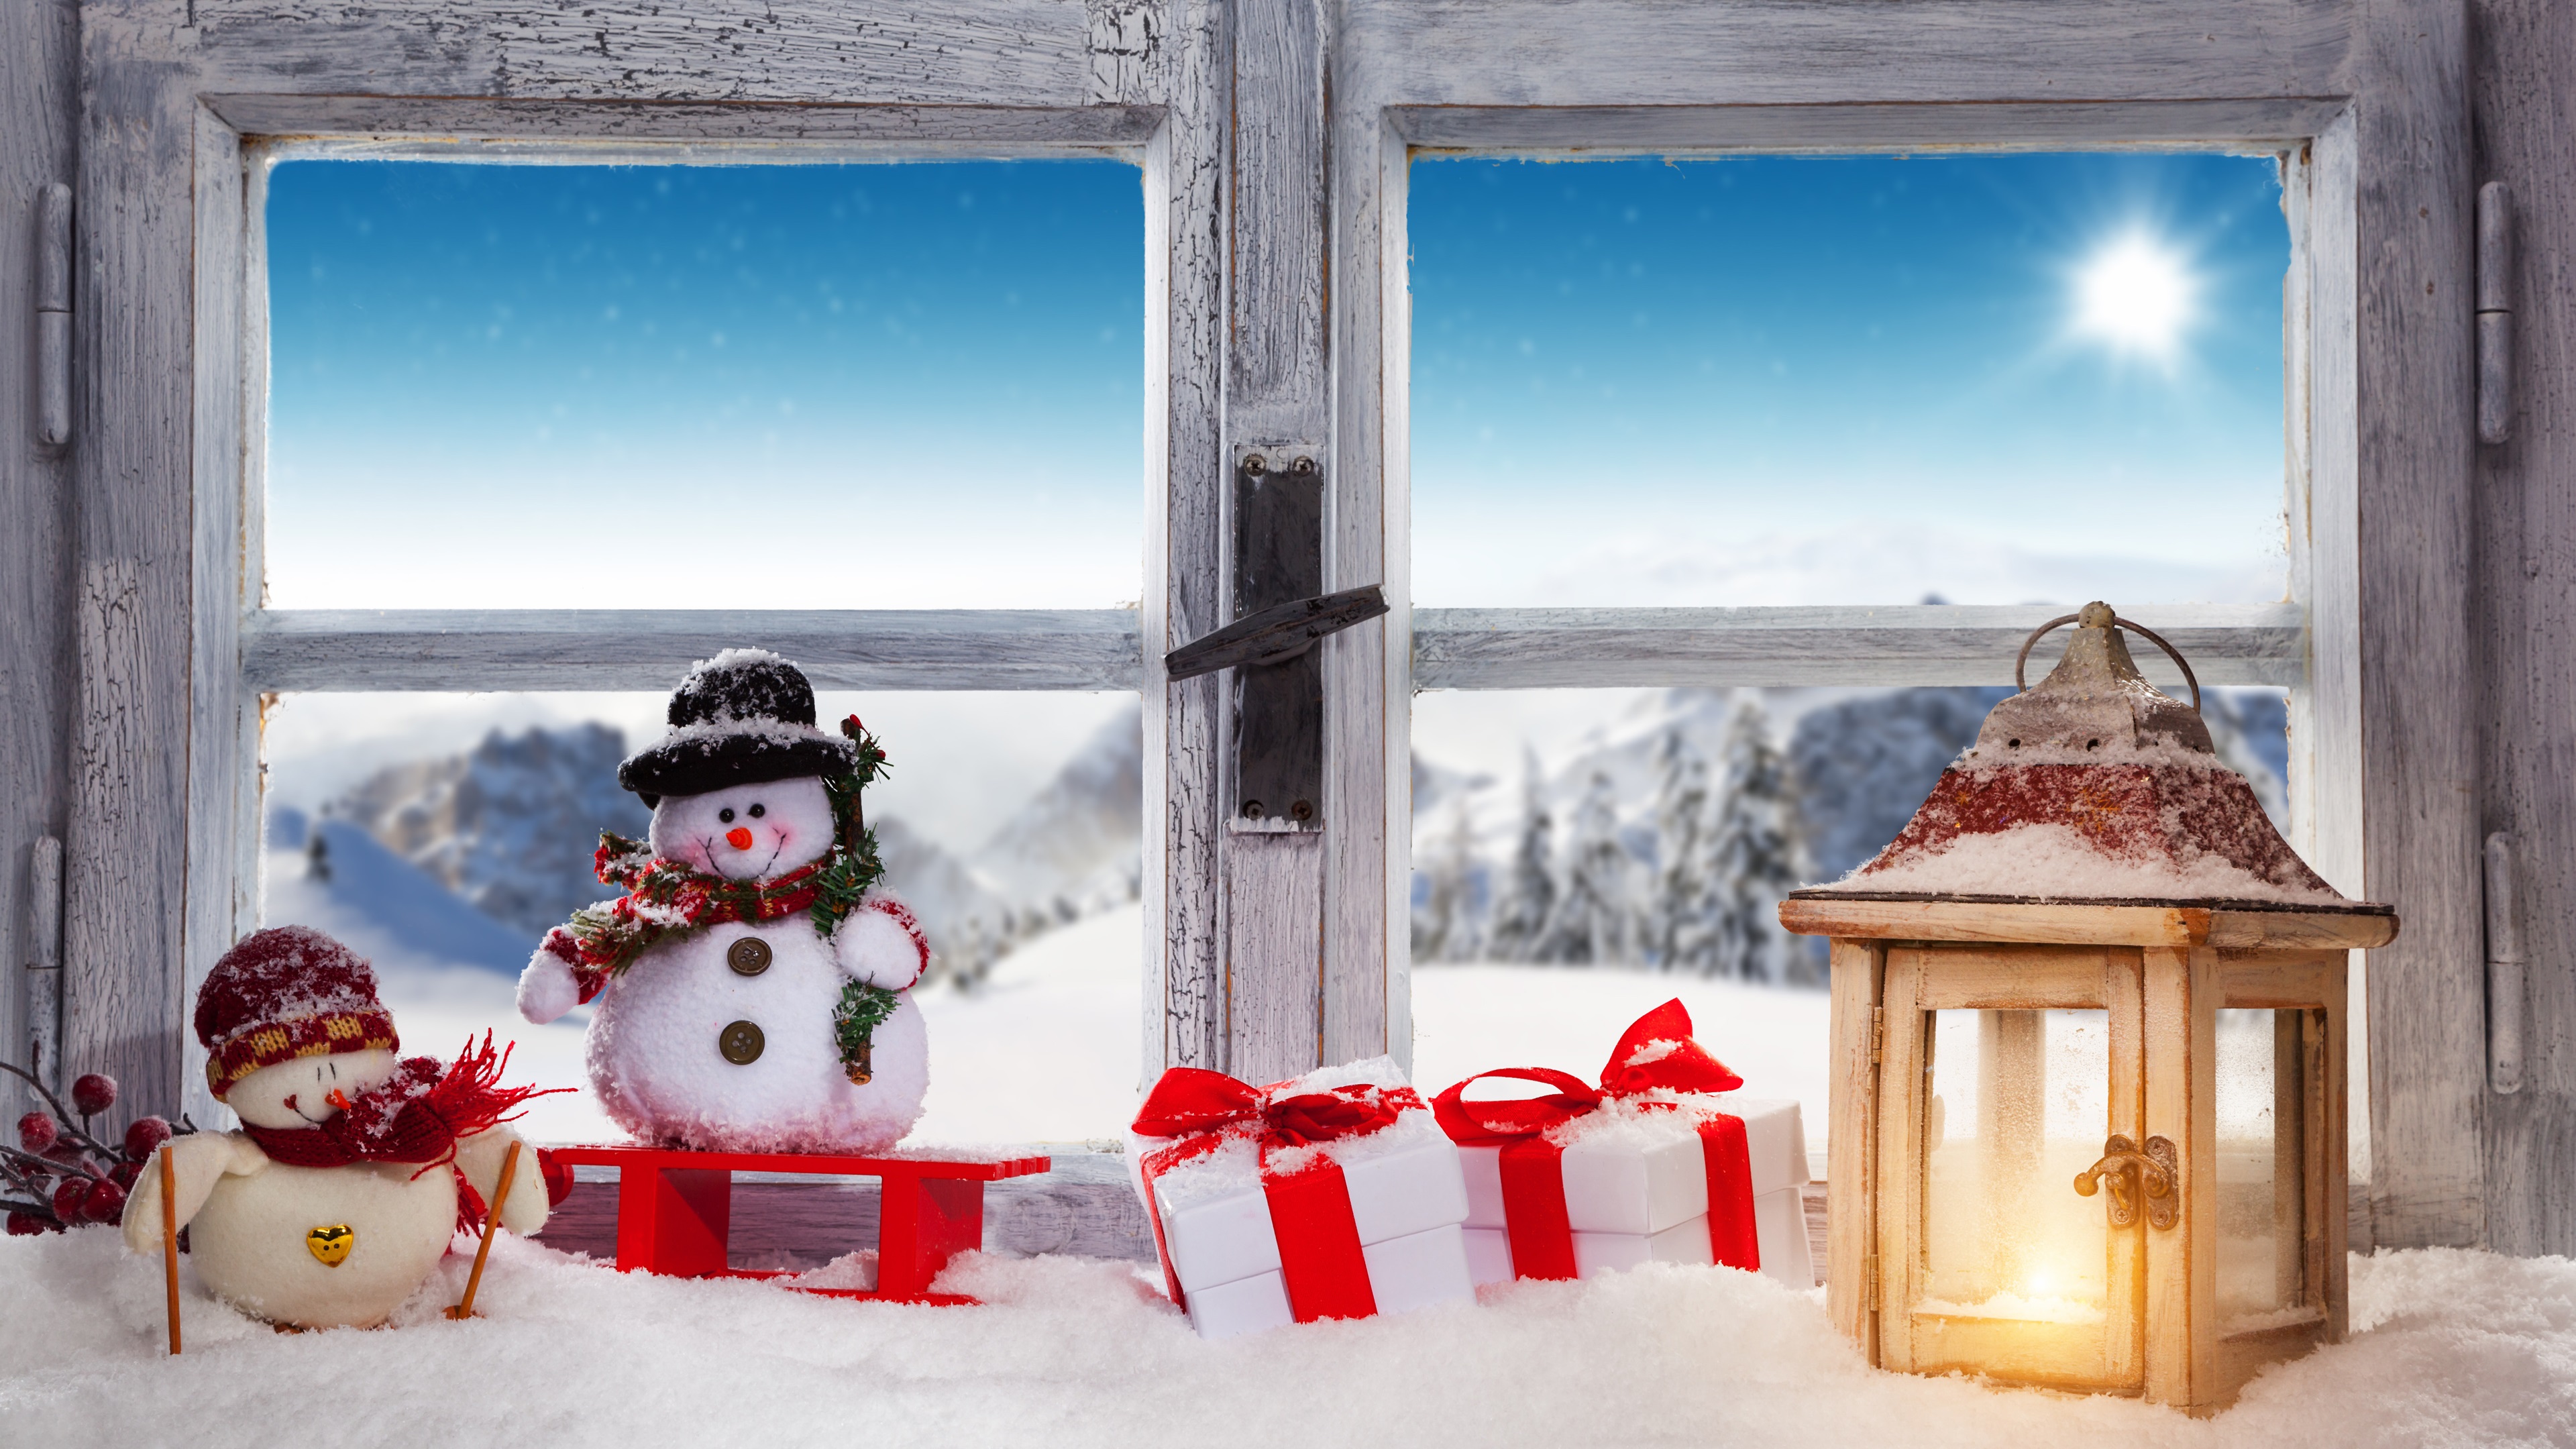 Wallpaper Christmas snowman snow window lamp gift 3840x2160 3840x2160